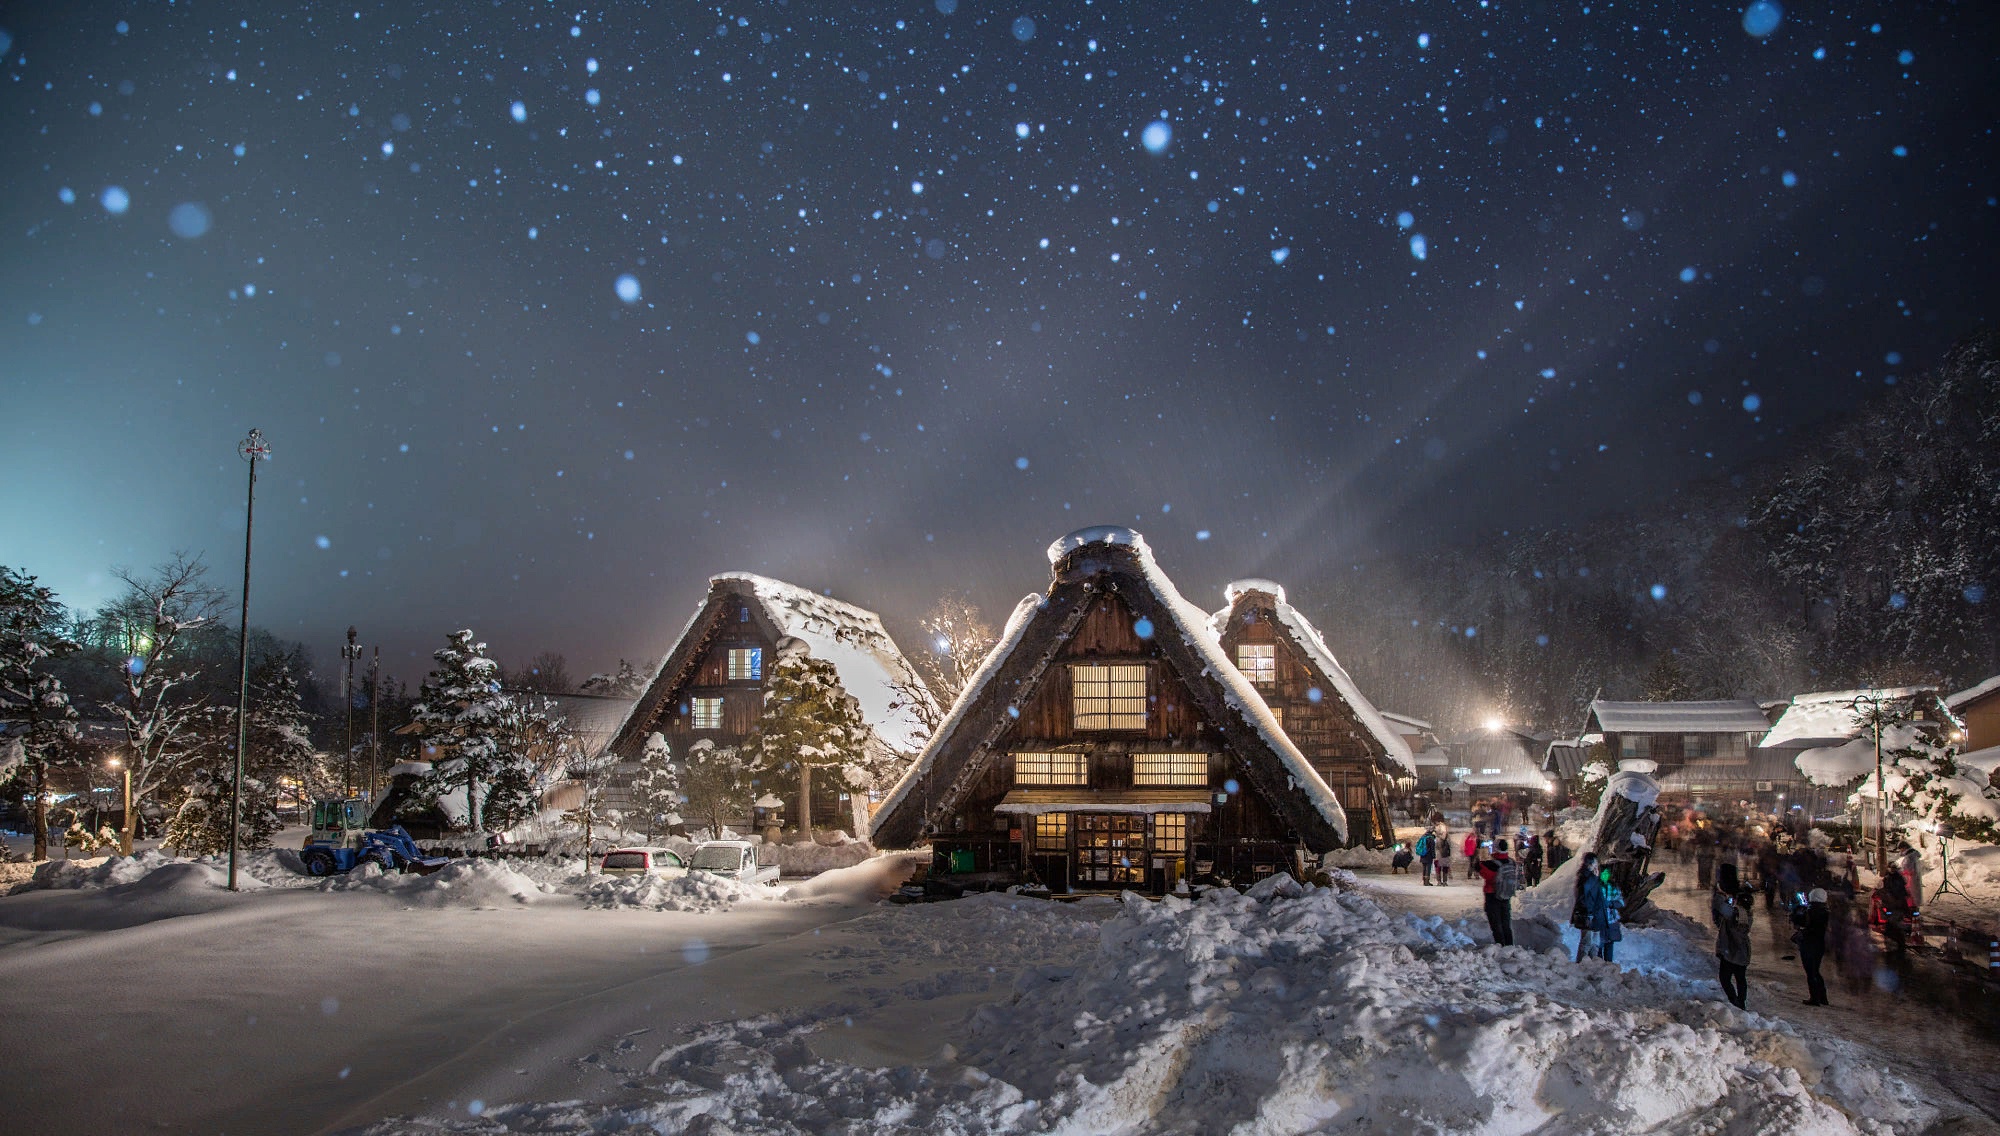 Snowy Winter Night over Japanese Village